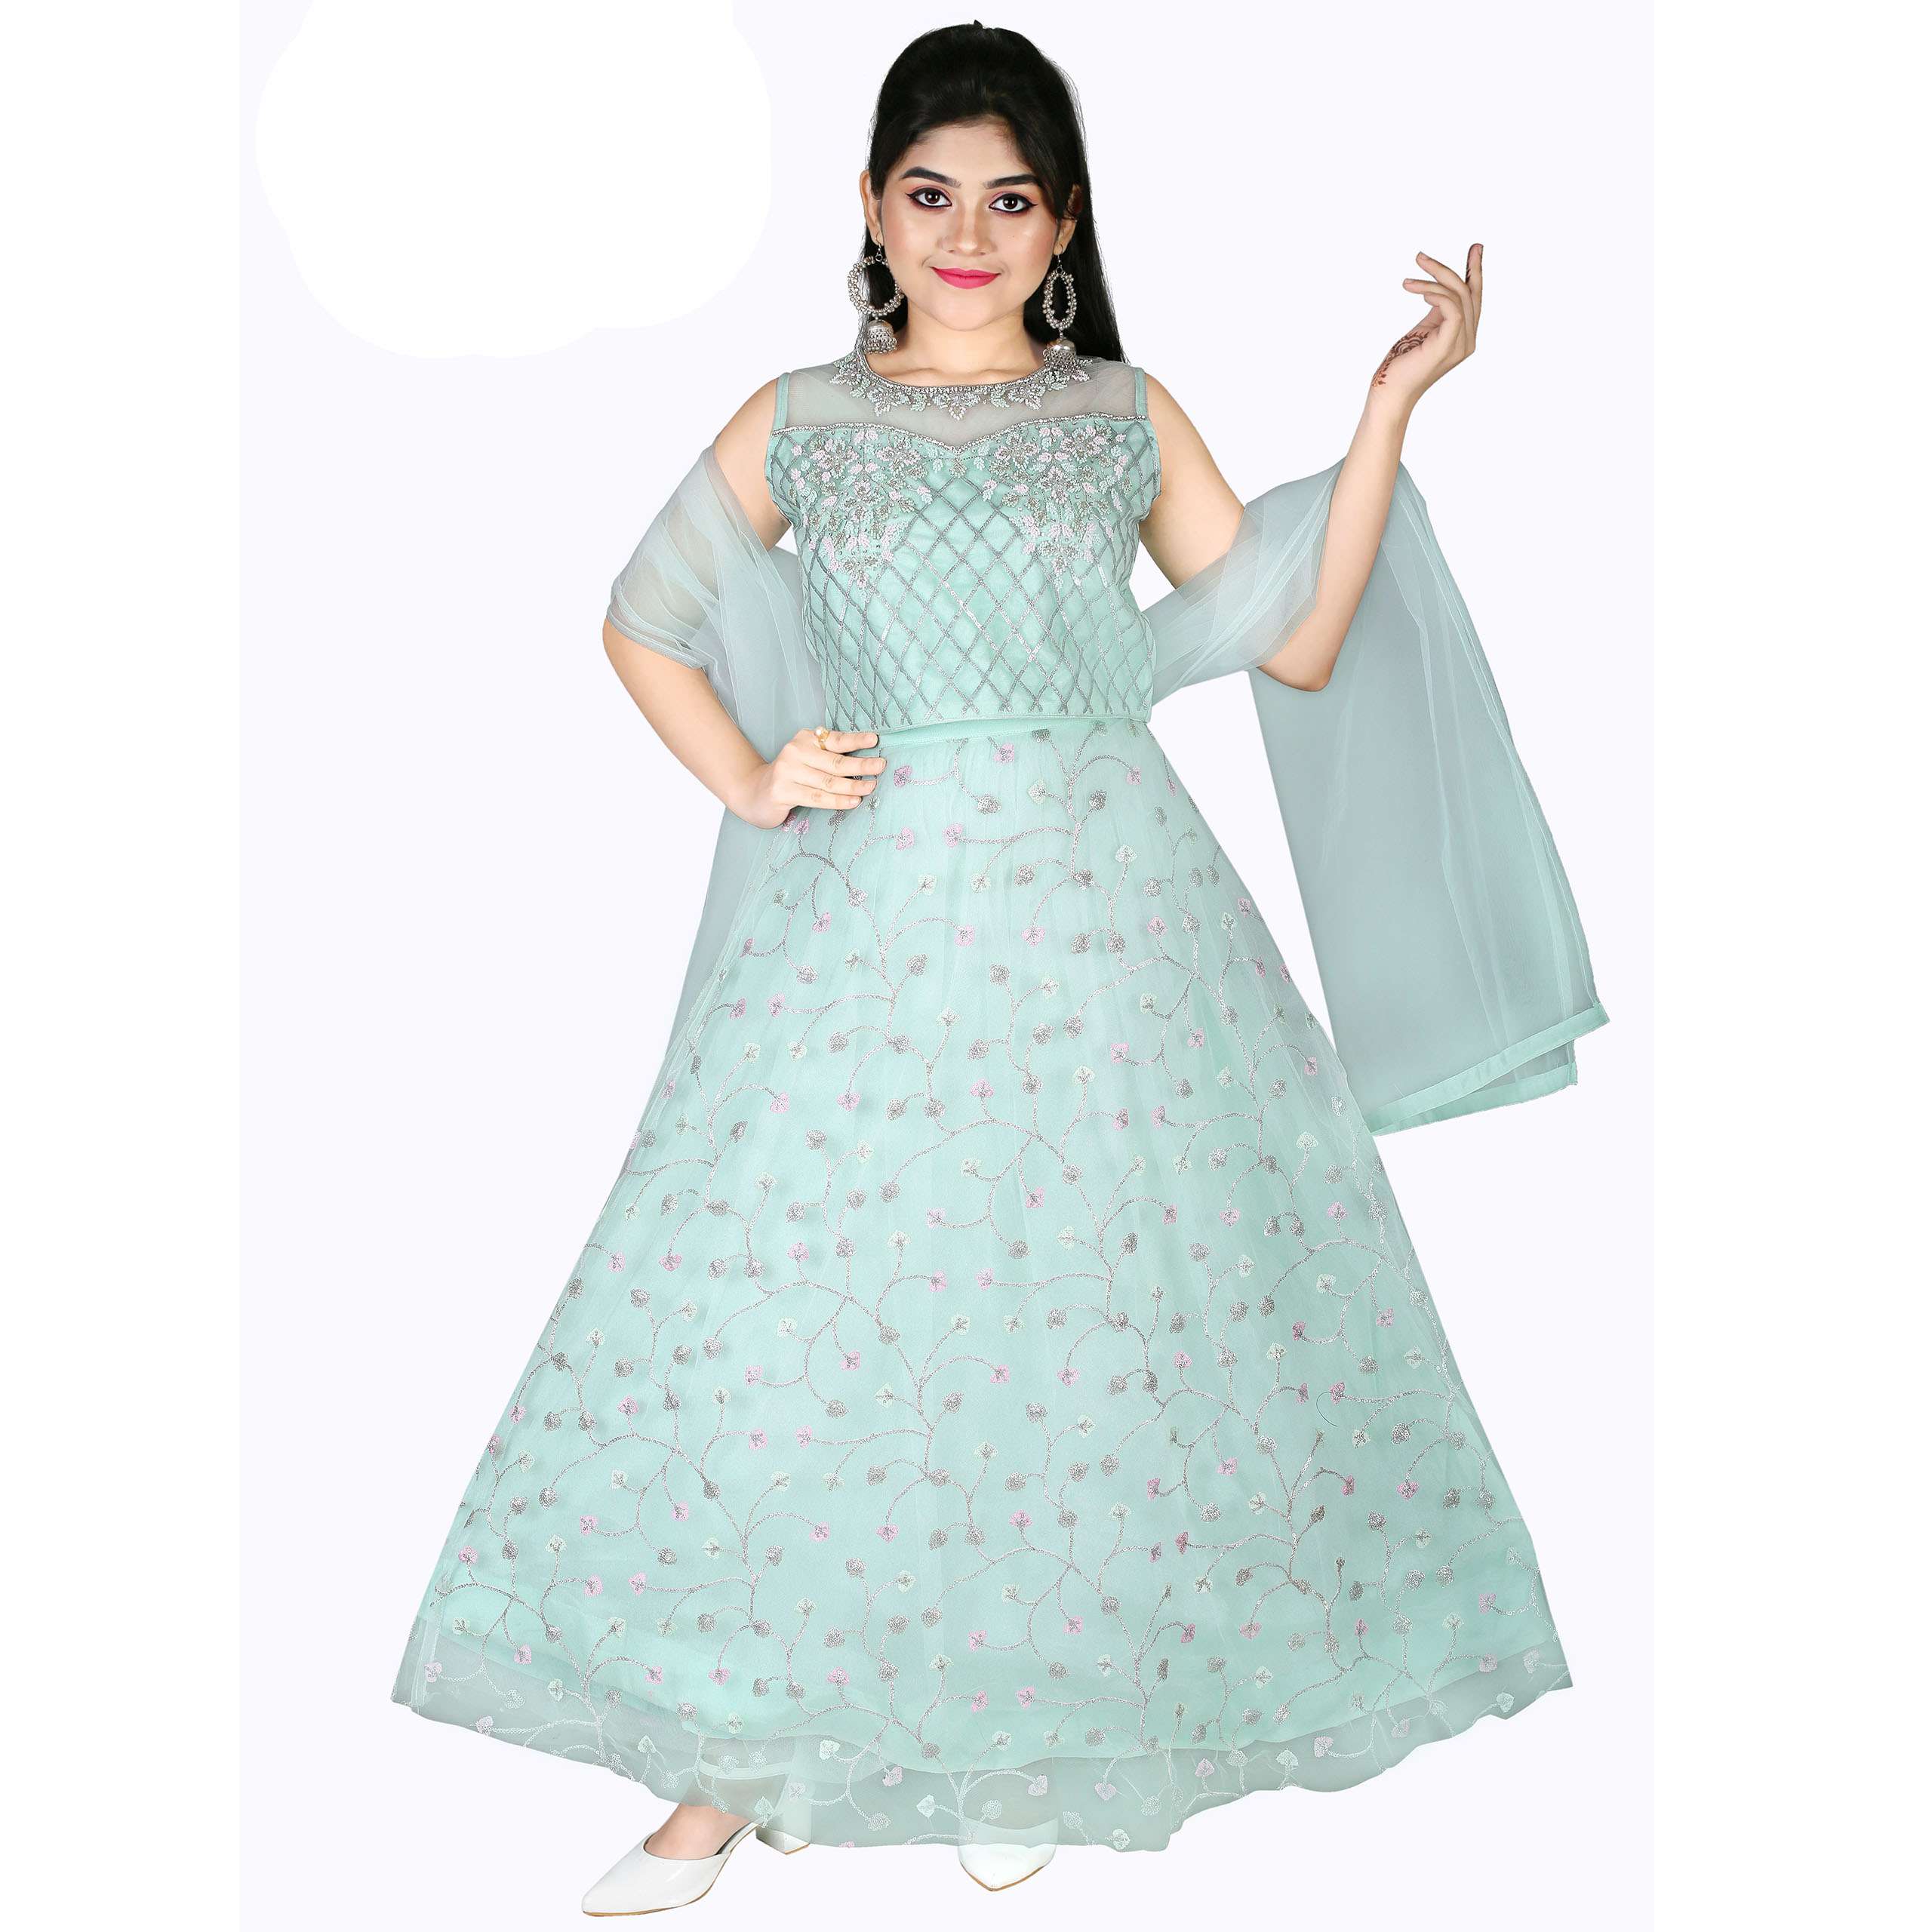 Balaji Emporium Presents Kids Wear Special Designer Indian Party Wear Net Anarkali Salwar Kameez Suit Girlish Dress Collection At Best Price 3025